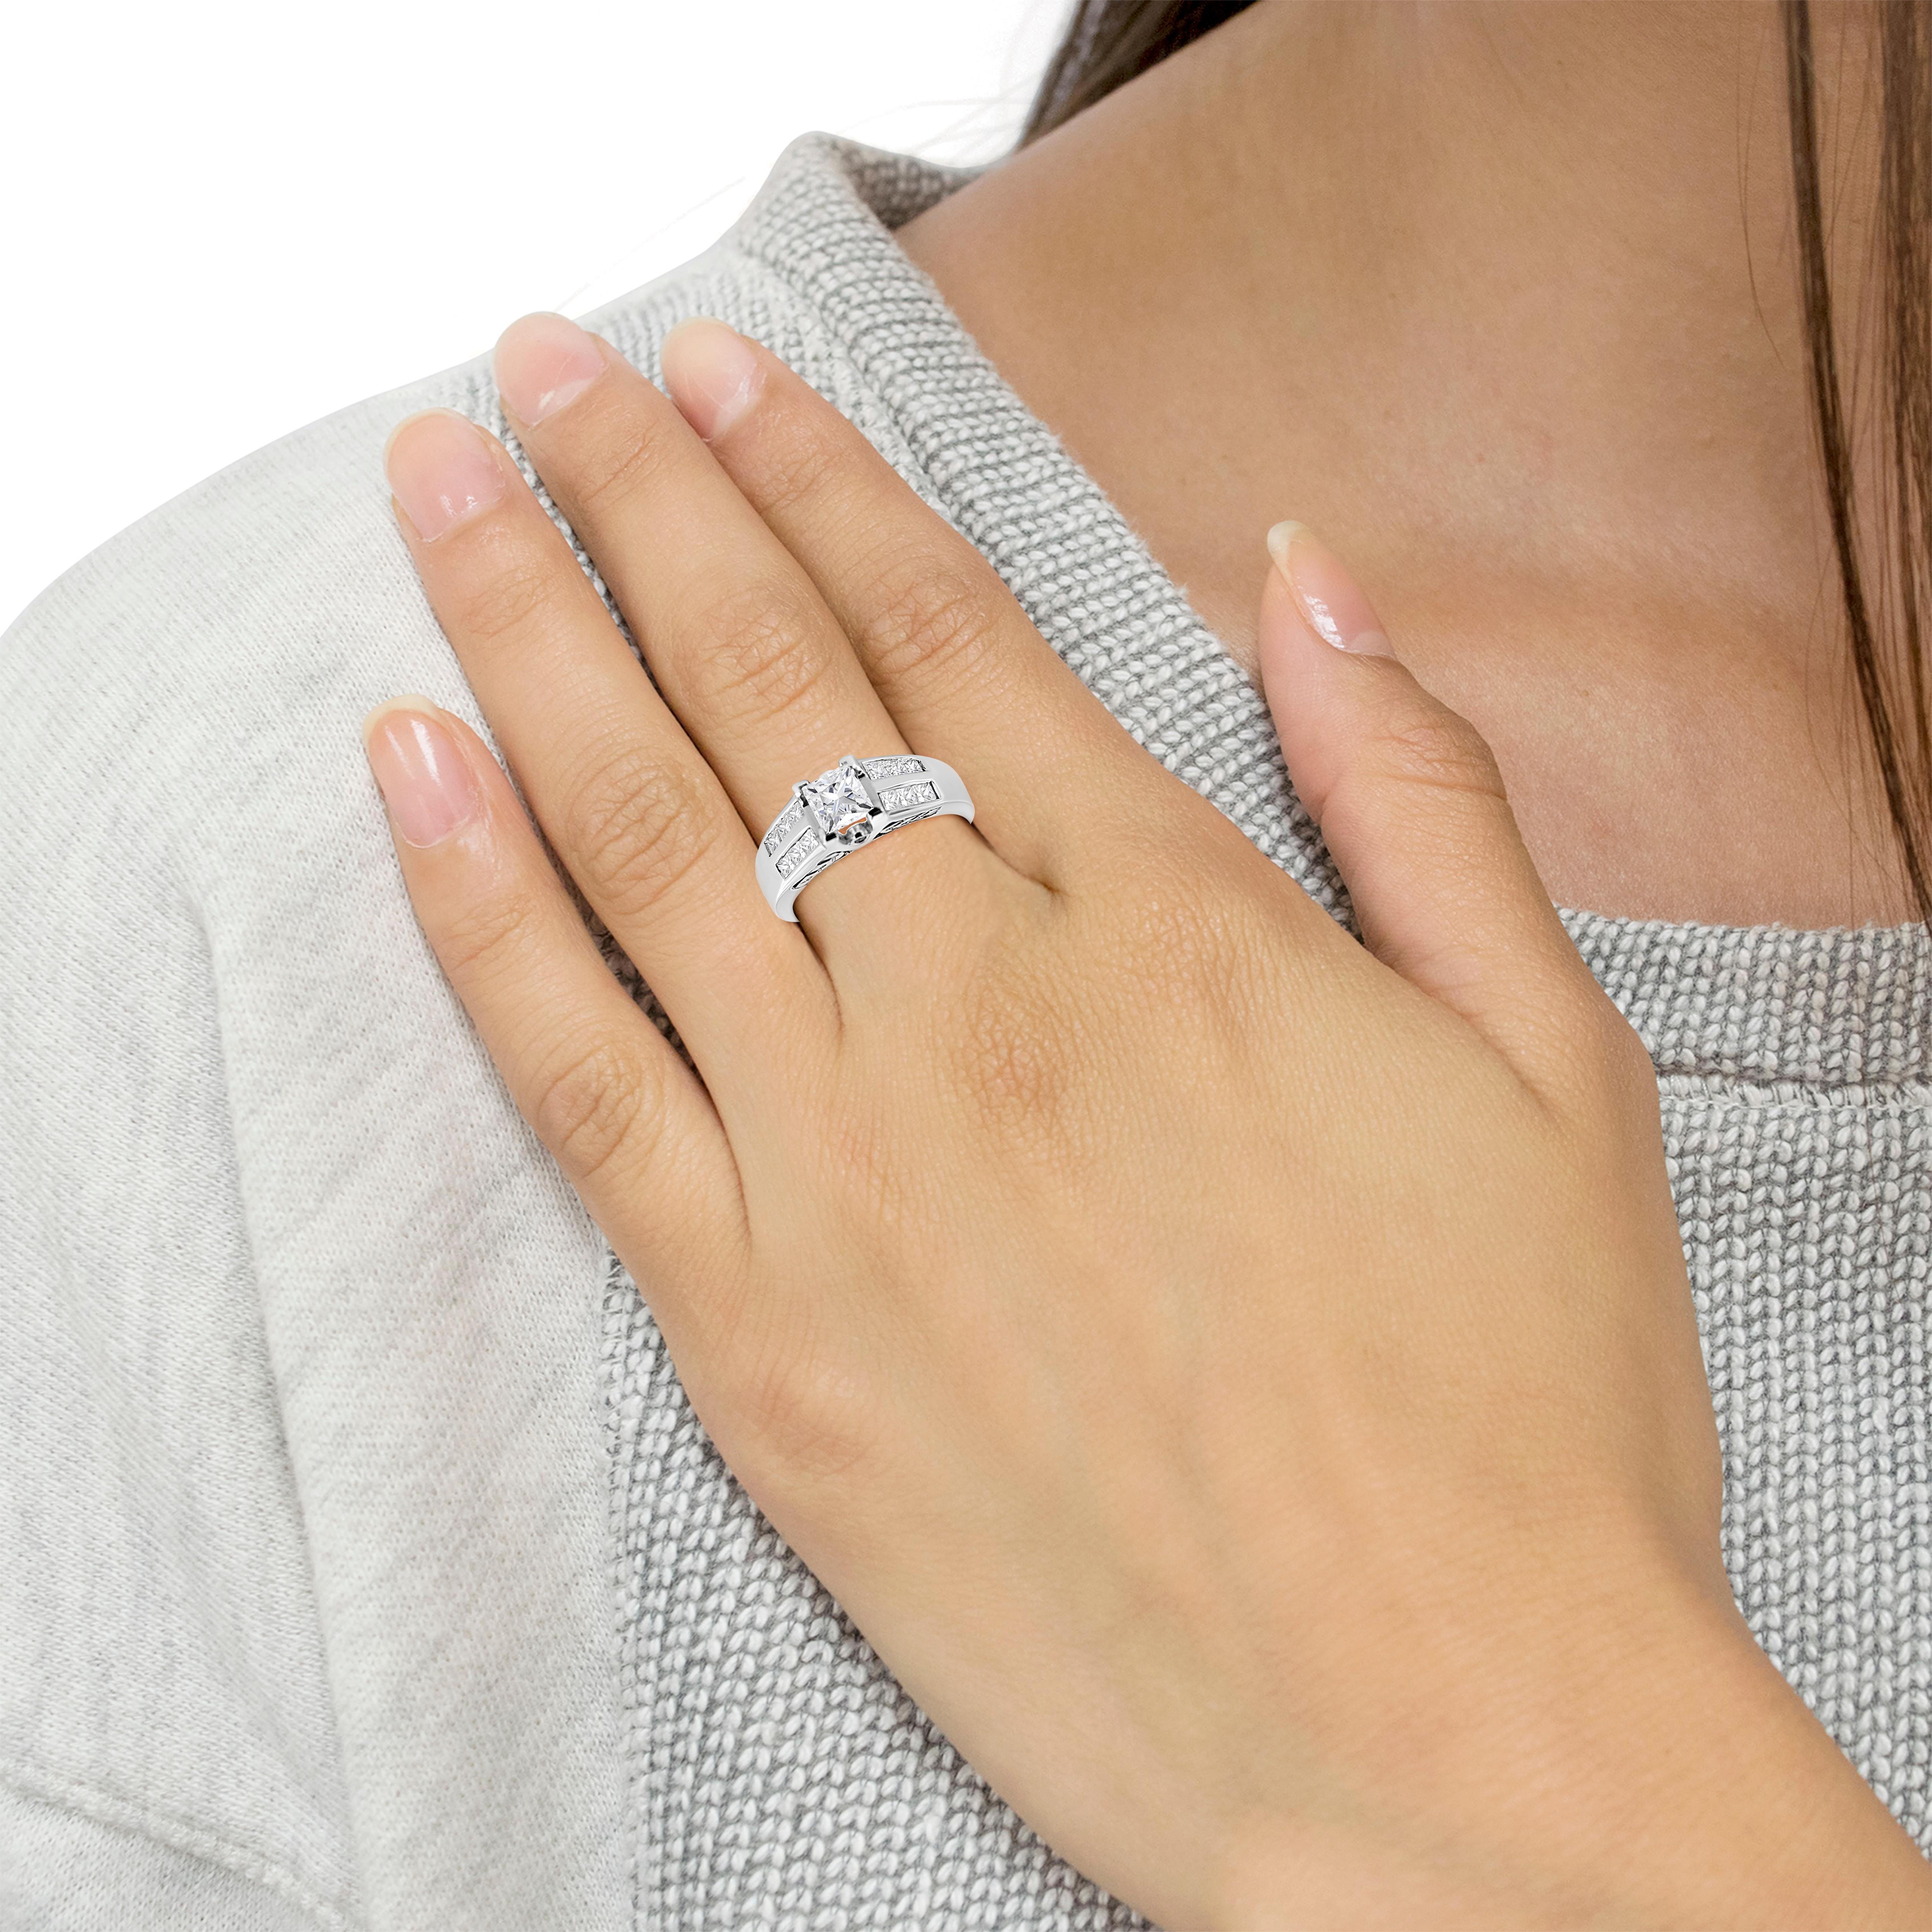 4 carat princess cut engagement ring